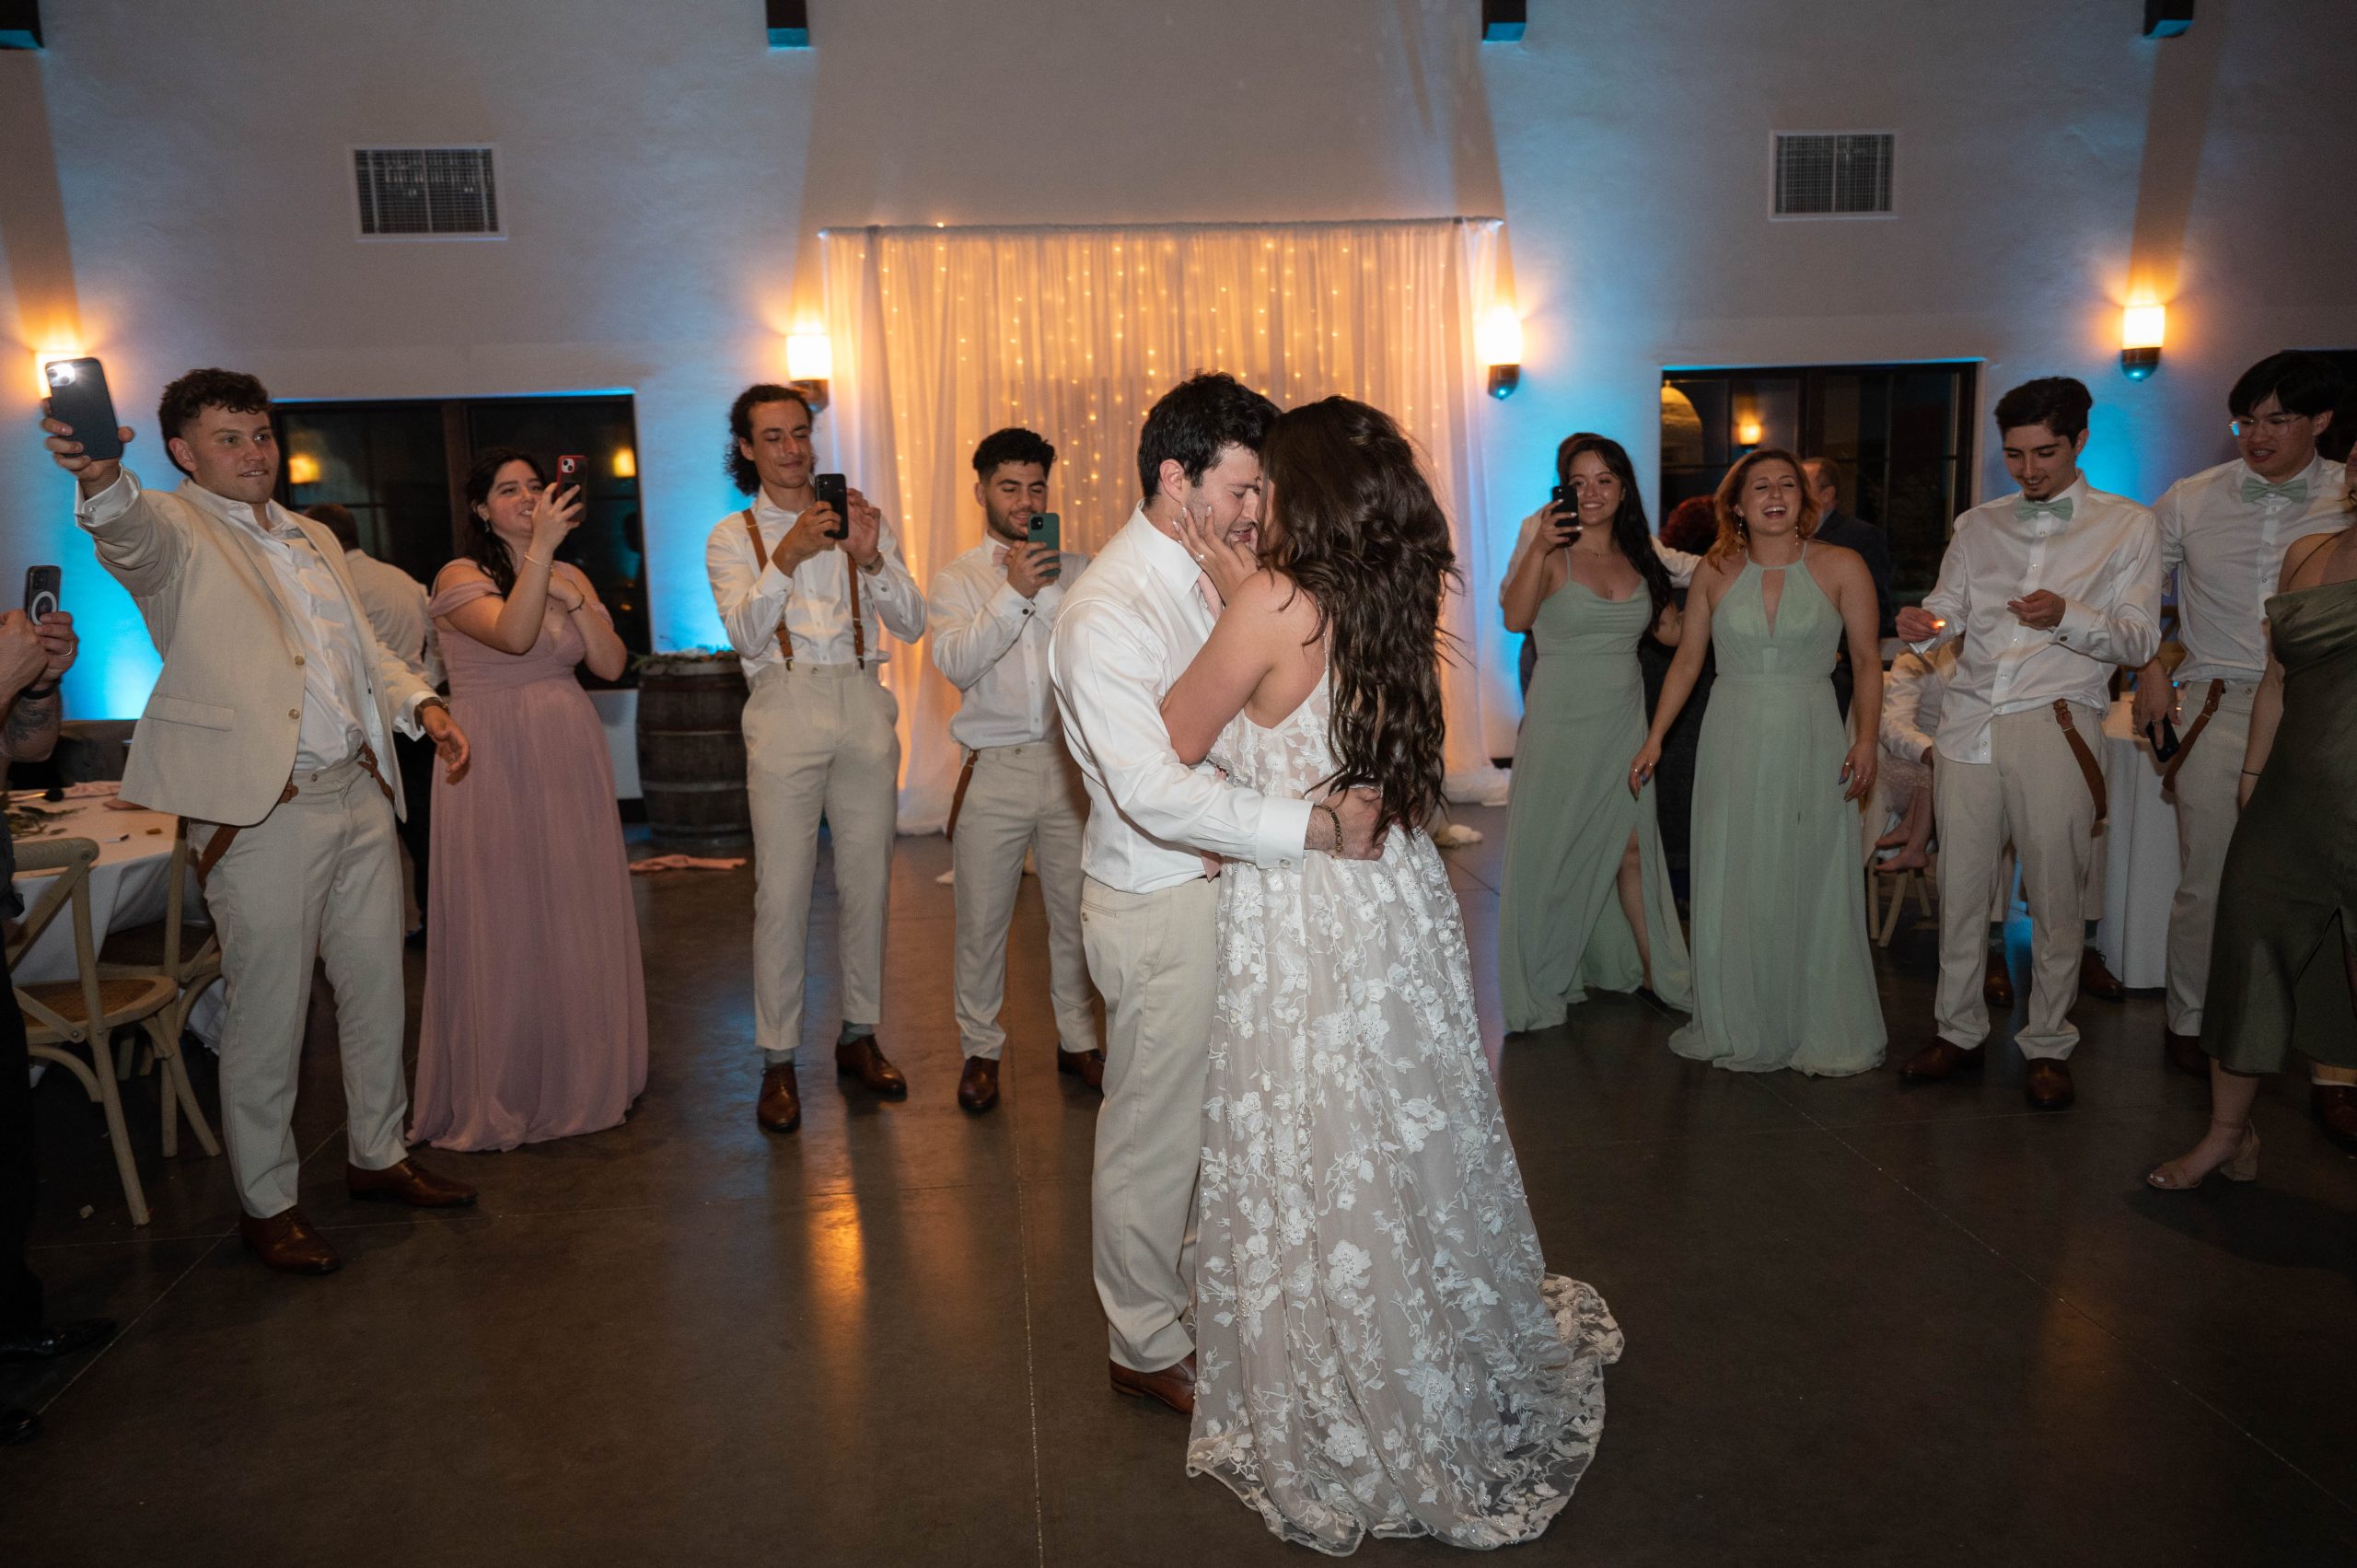  Dances from Soft Romantic + Minimalistic Wedding at Viansa Winery in Sonoma Jen Vazquez Photography